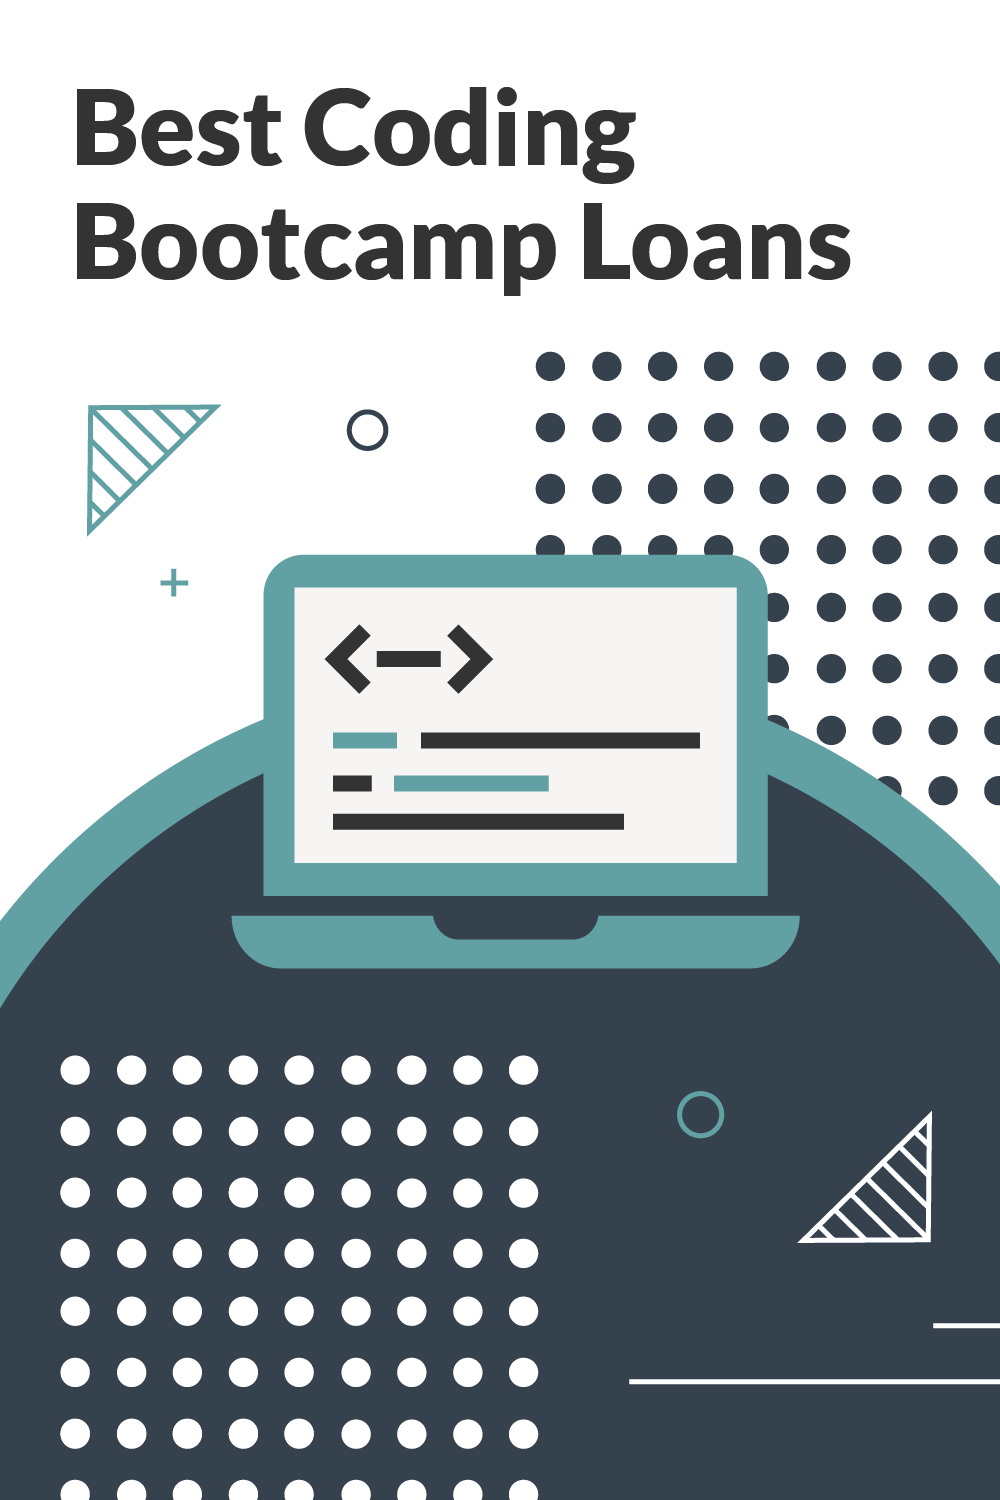 Best coding bootcamp loans pinterest image